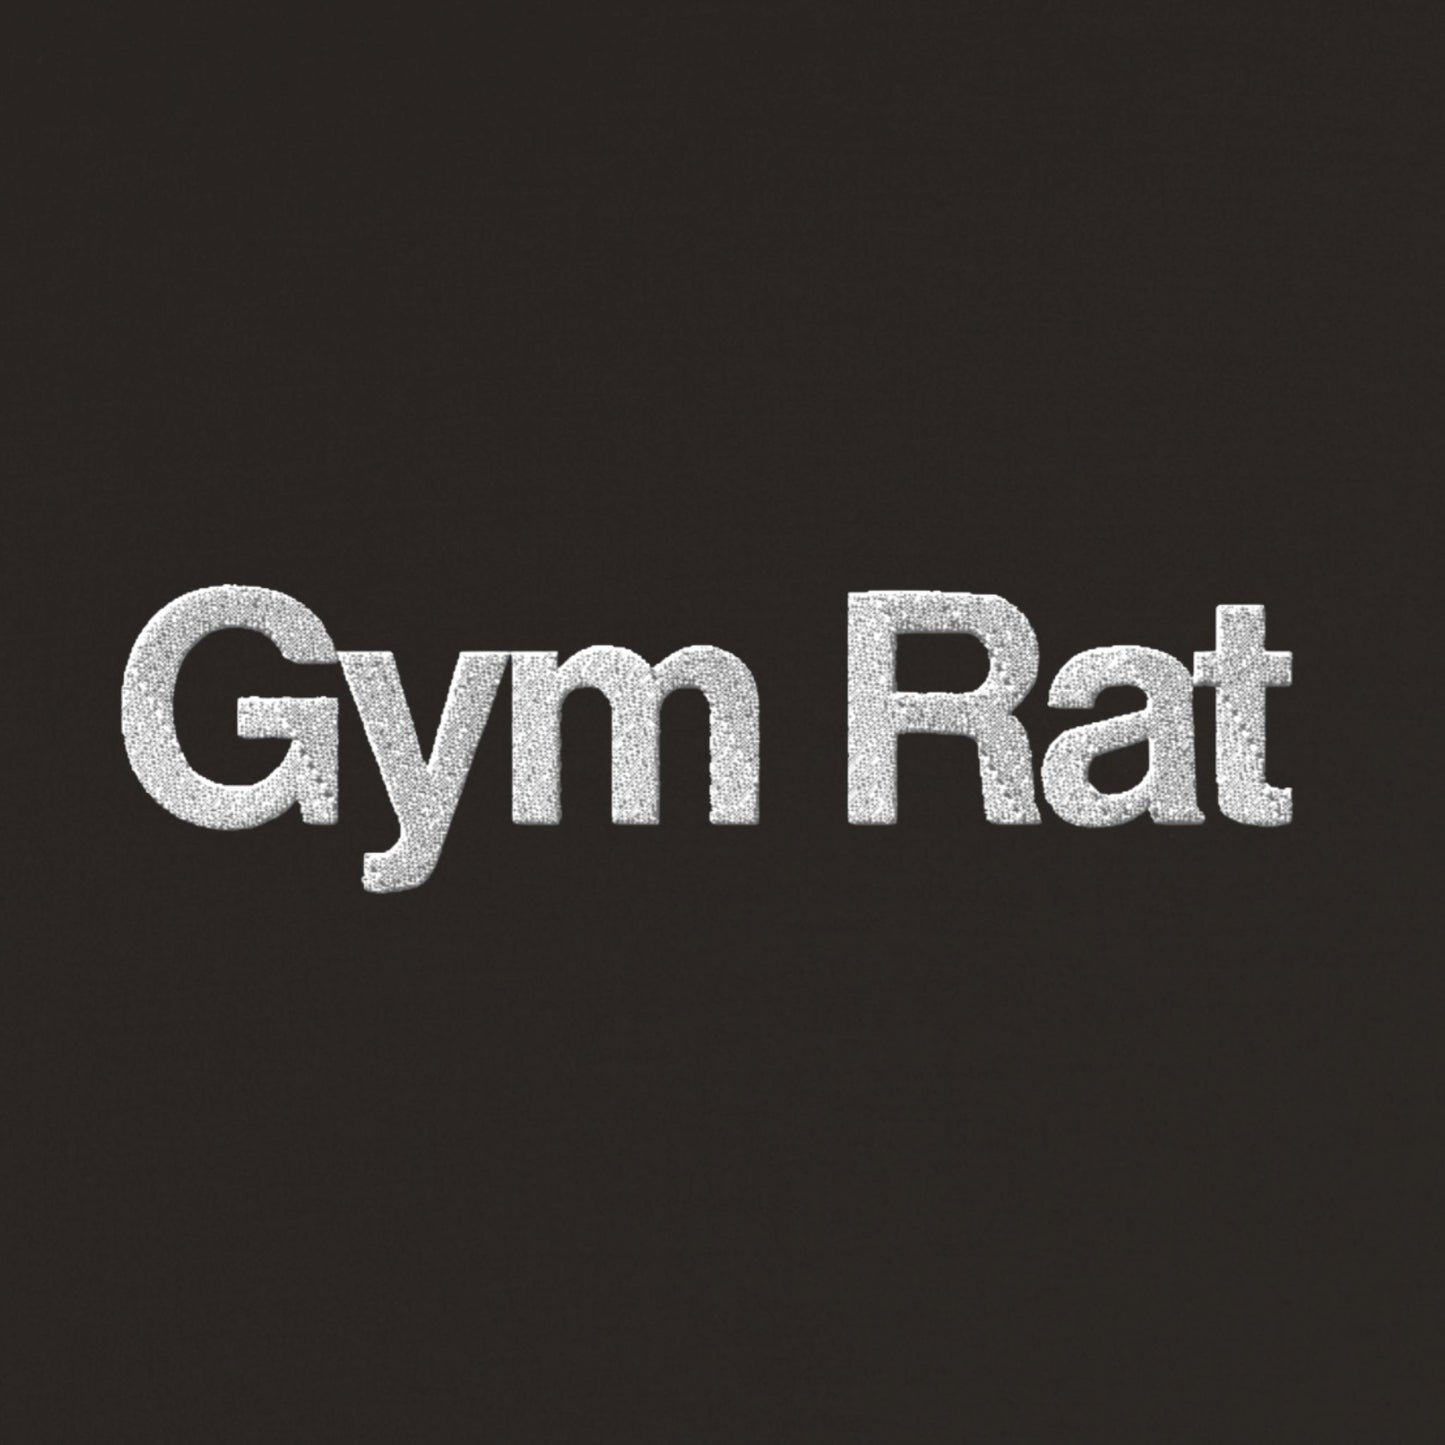 Personalized Gym Rat Sweatshirt